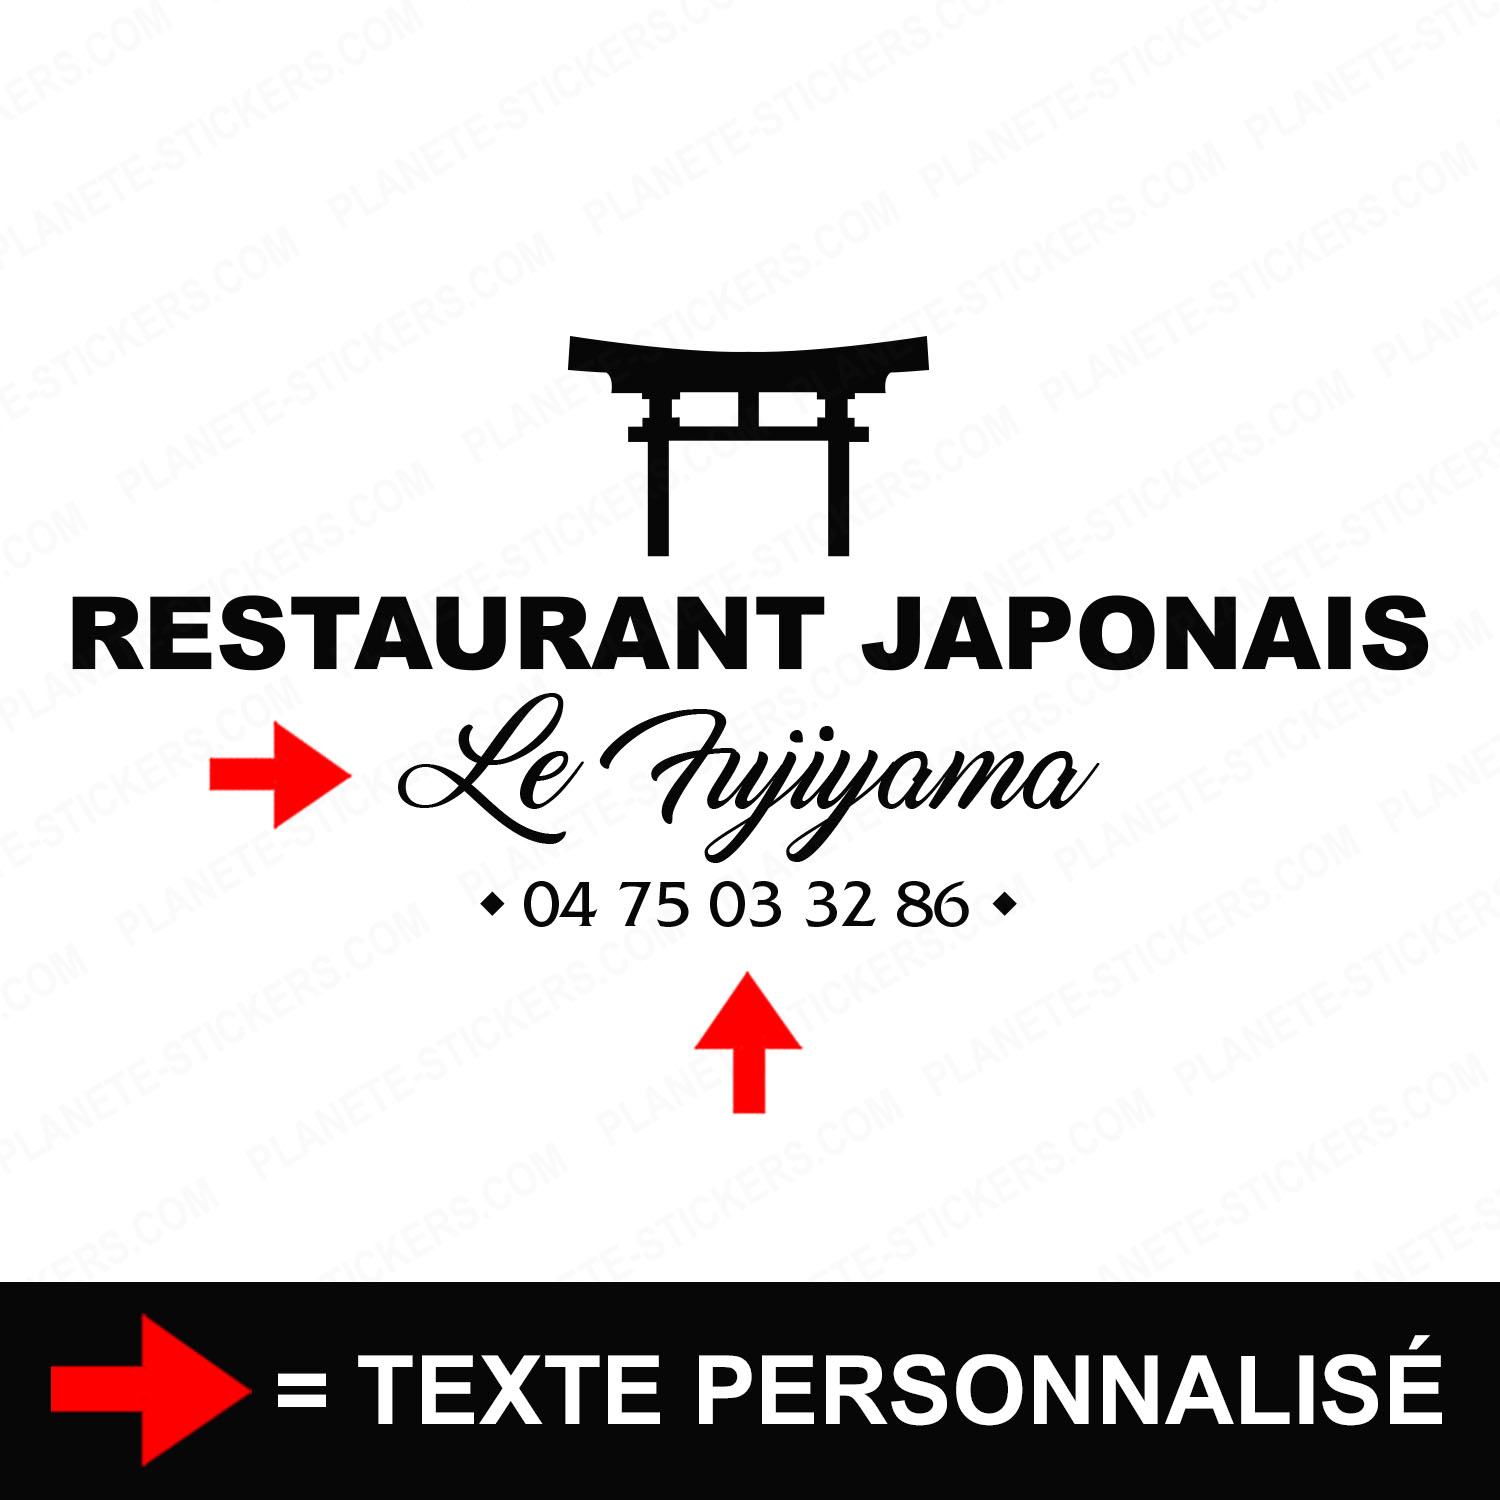 ref24restaurantvitrine-stickers-restaurant-japonais-vitrine-restaurant-sticker-personnalisé-autocollant-pro-restaurateur-vitre-resto-professionnel-logo-tori-2